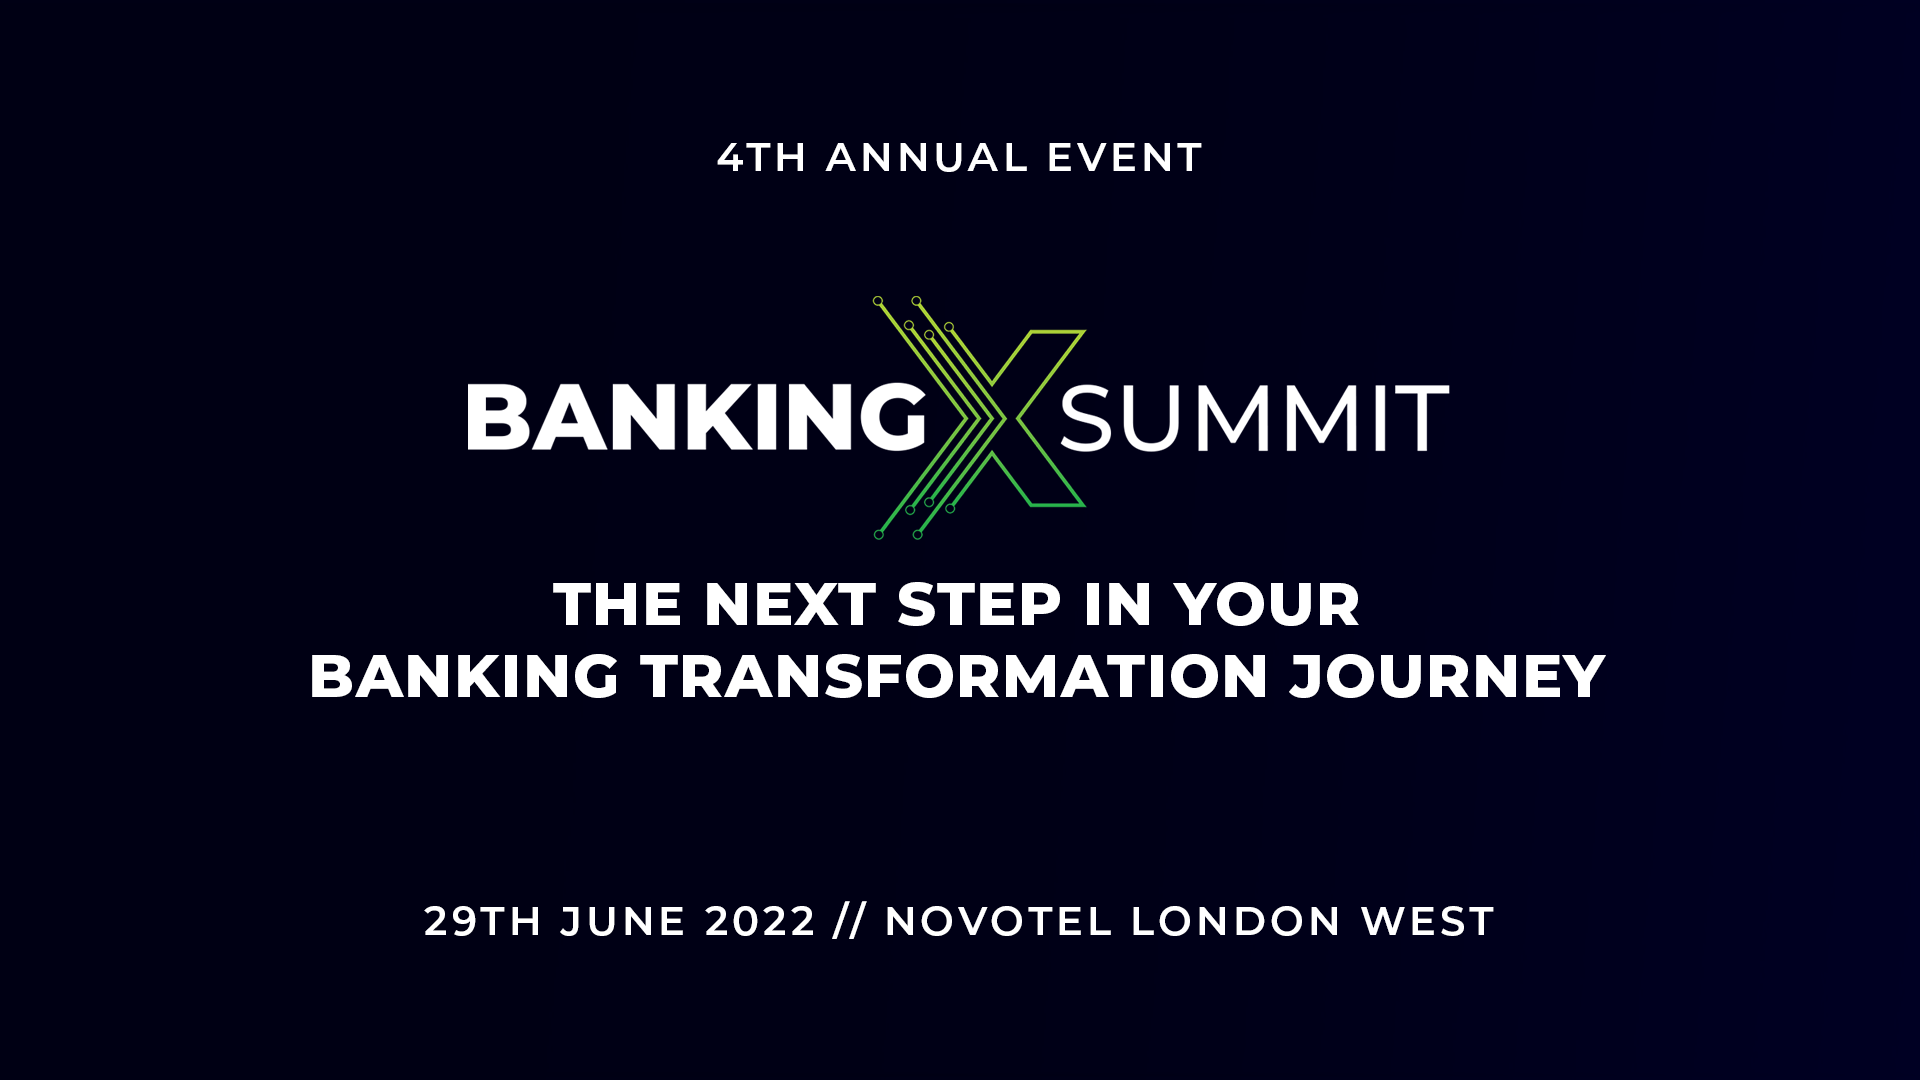 Banking Transformation Summit 2022 (Date: 29th June 2022 - Location: Novotel London West)